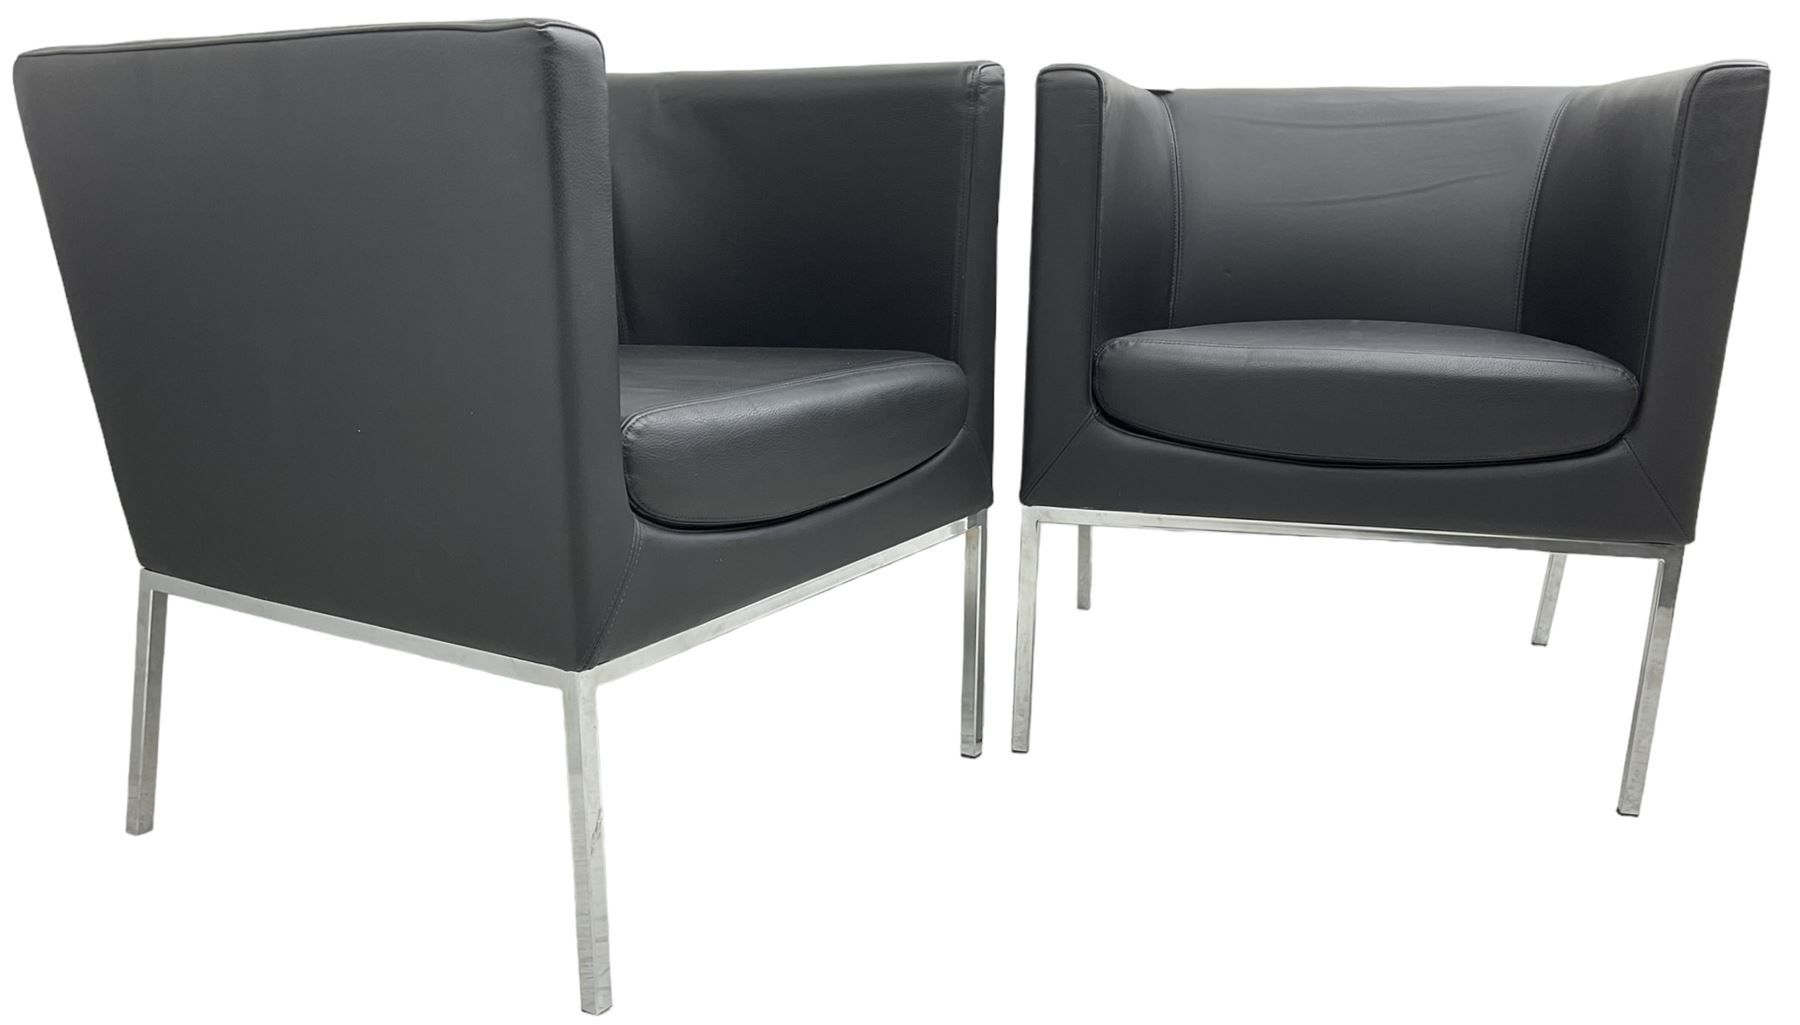 Orangebox - pair of contemporary 'Drift' tub armchairs - Image 4 of 7